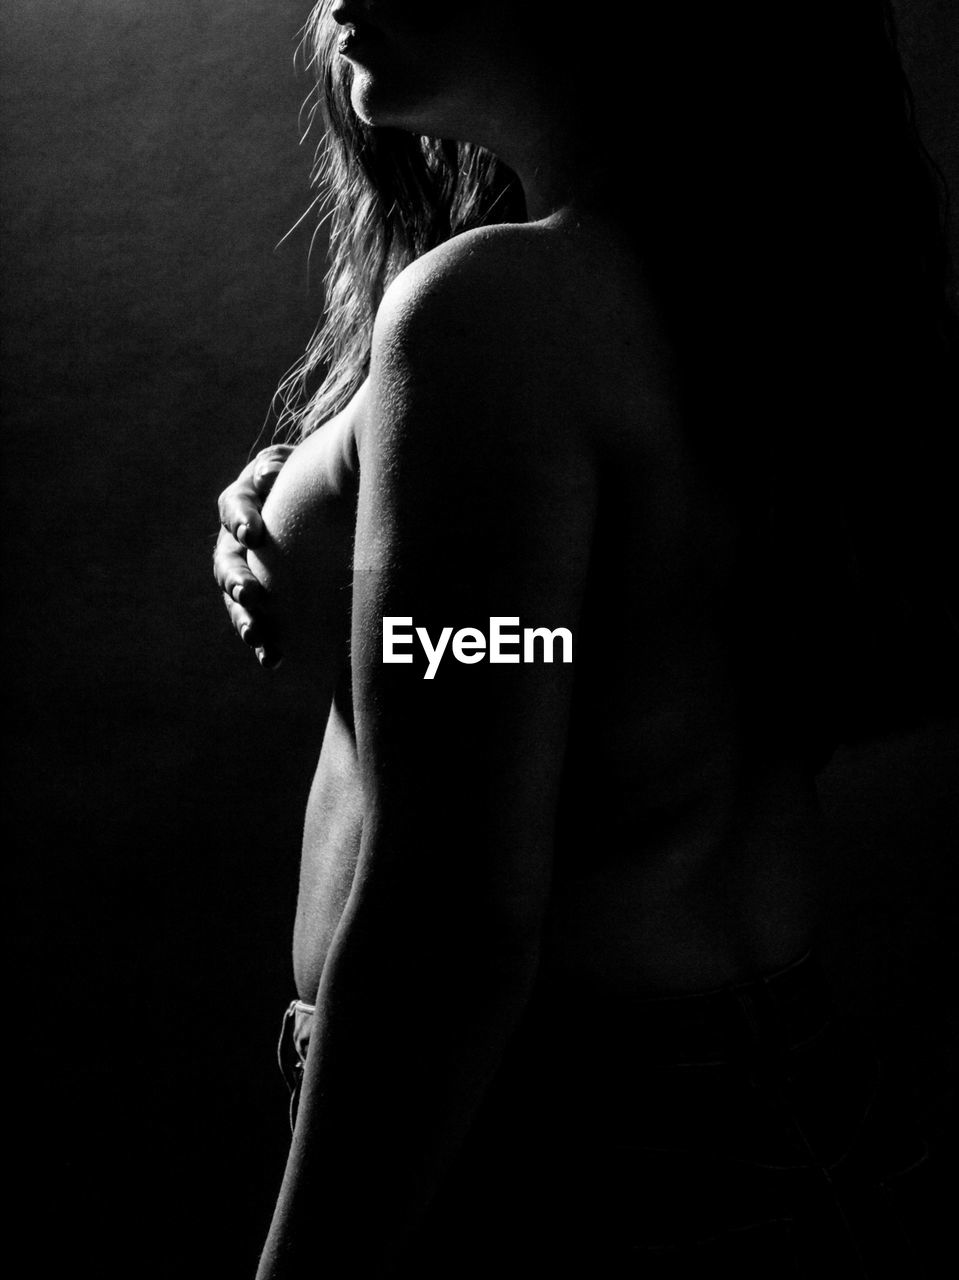 Naked woman standing in darkroom